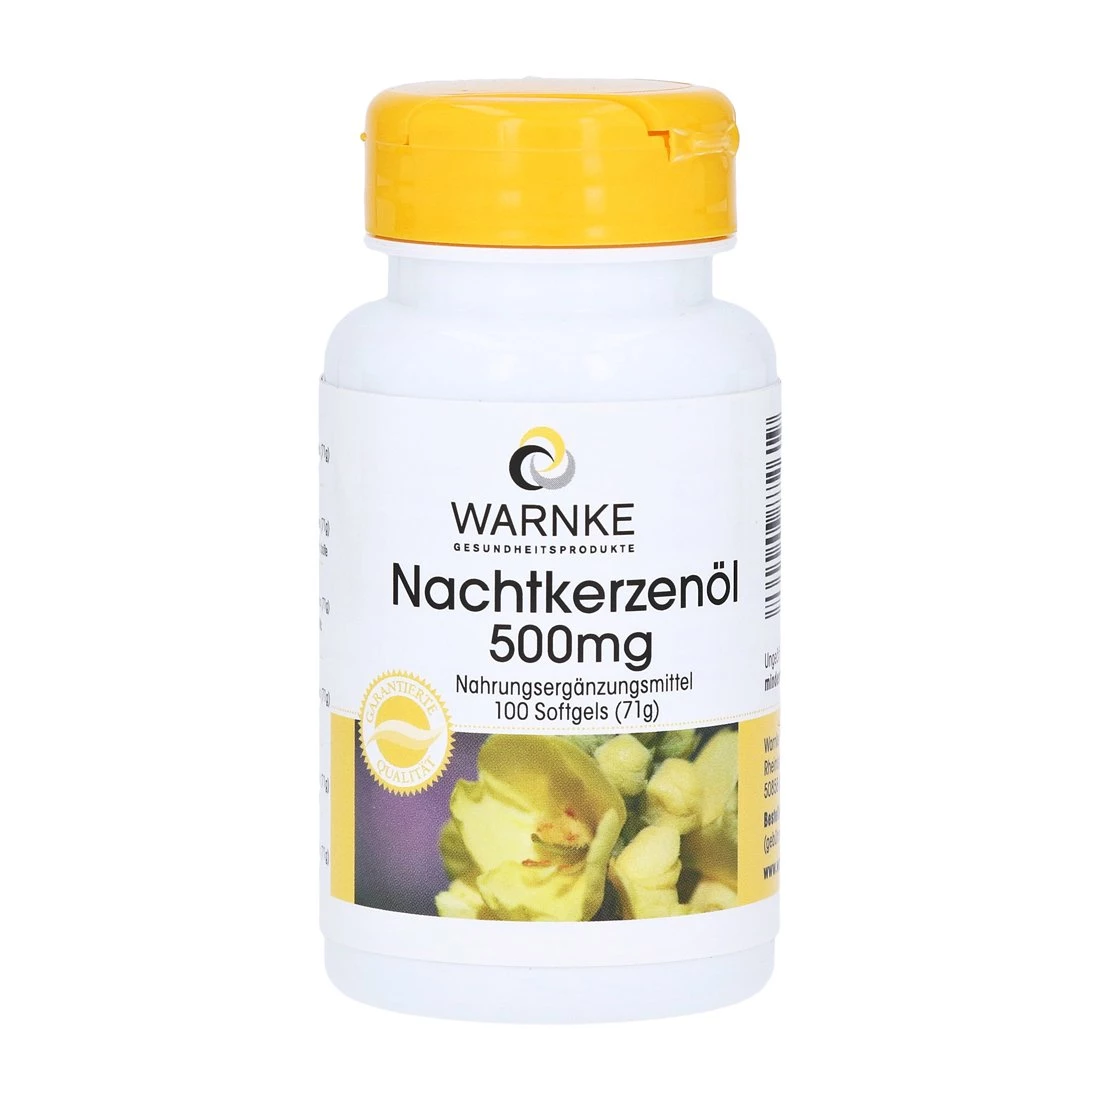 Warnke Nachtkerzenol 500mg - Bổ sung tinh dầu hoa anh thảo và vitamin E